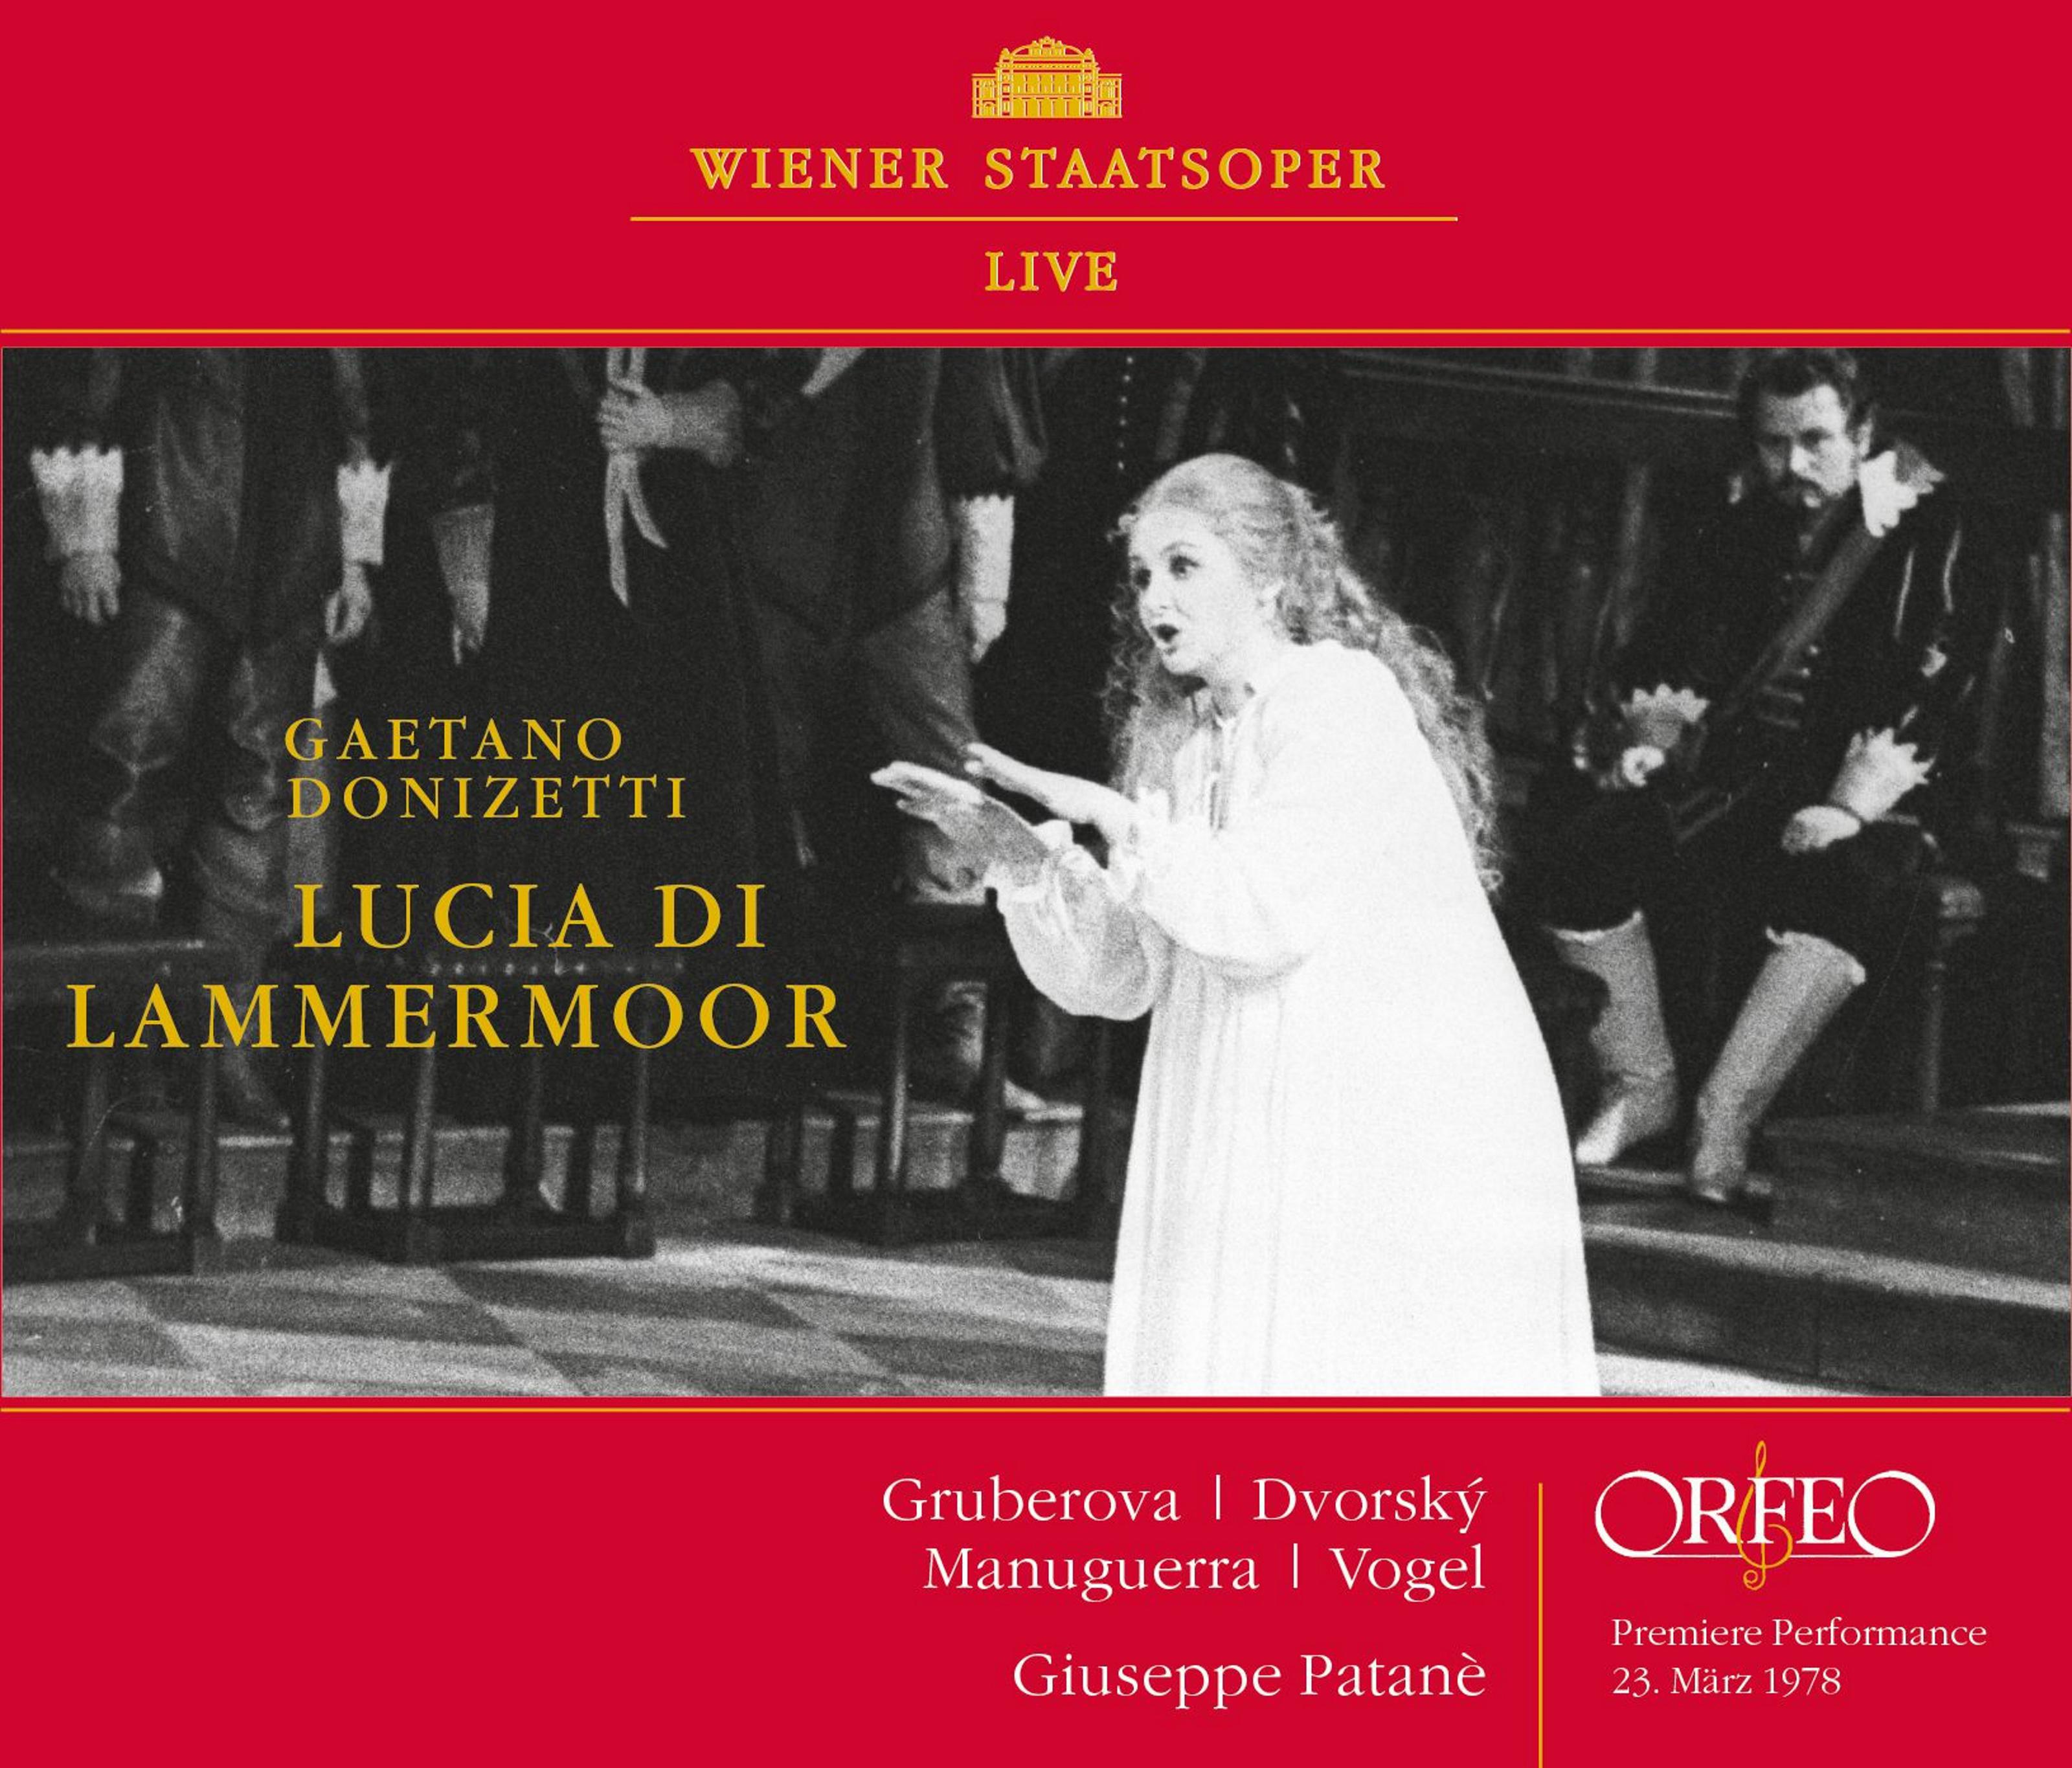 Lucia di Lammermoor, Act II:Lucia di Lammermoor, Act II: D'immenso giubilo - Deh, cessate quel contento (Live)